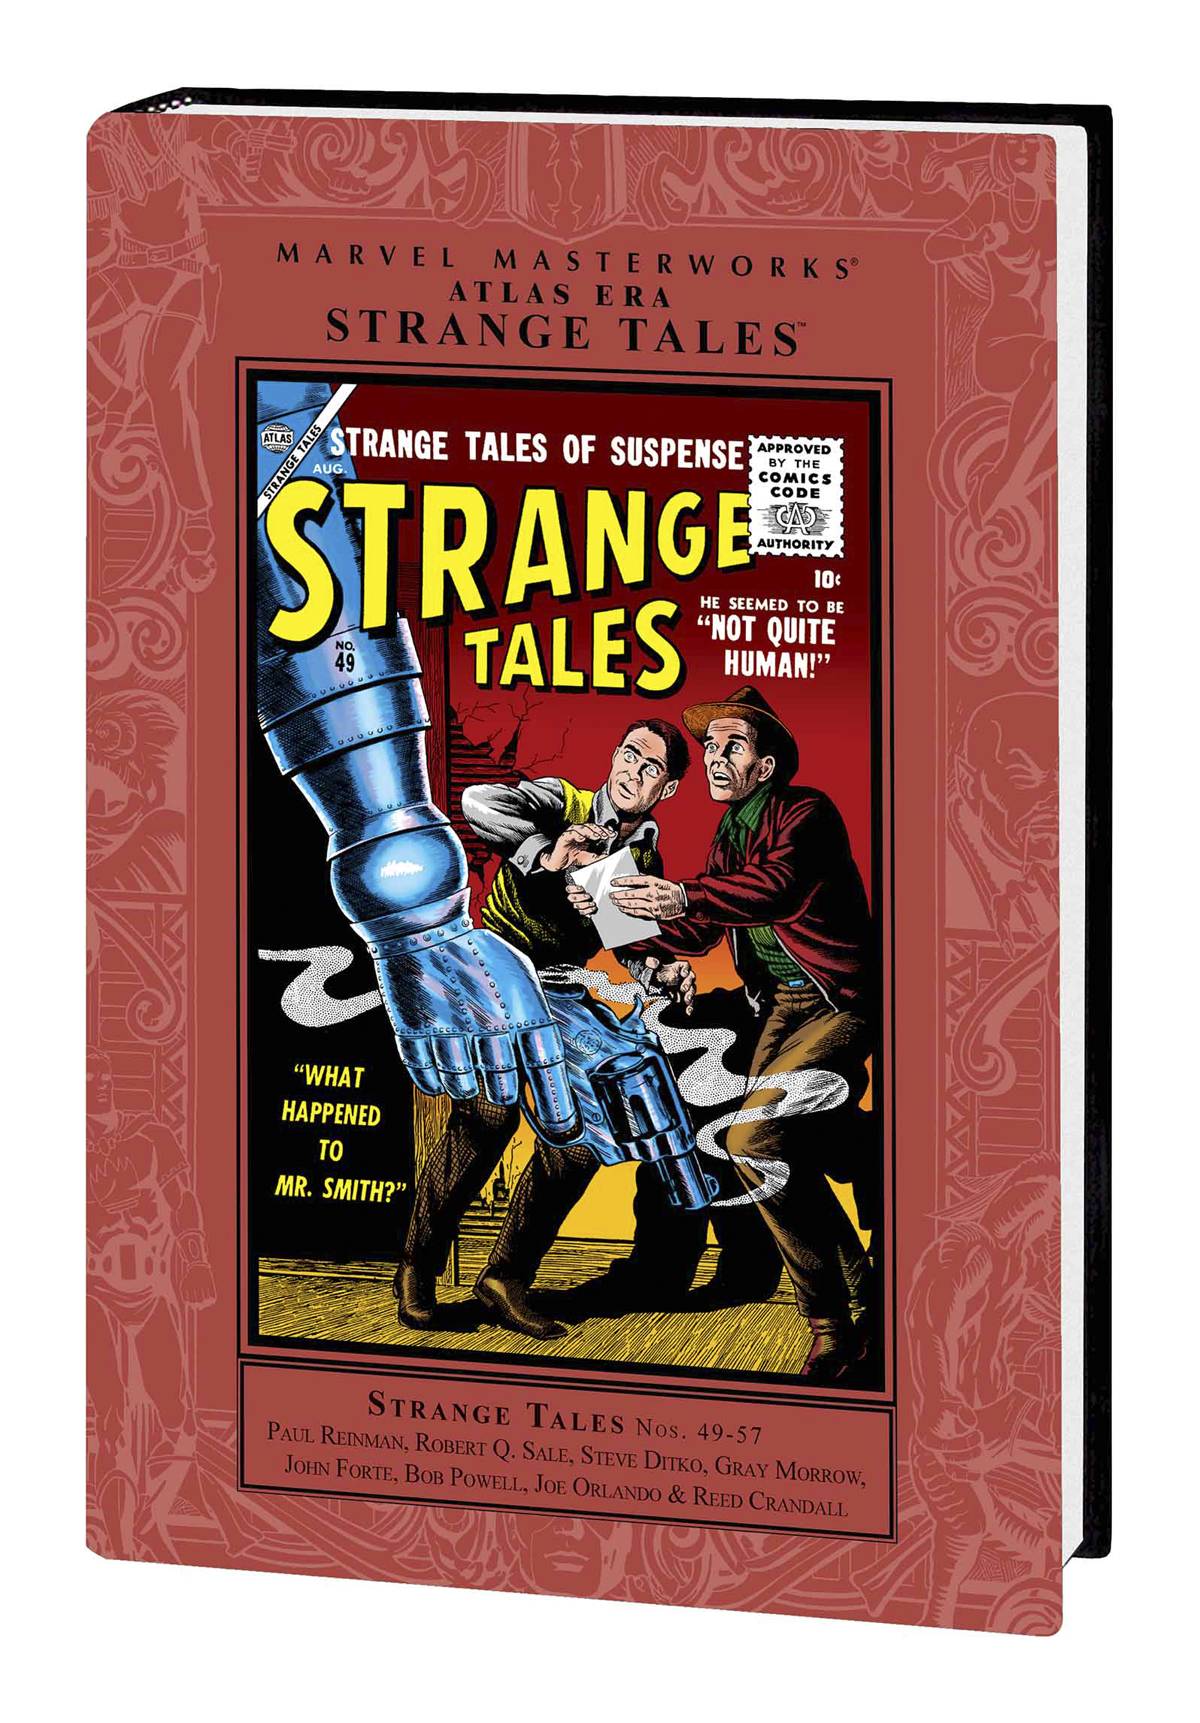 Marvel Masterworks Atlas Era Strange Tales Hardcover Volume 6